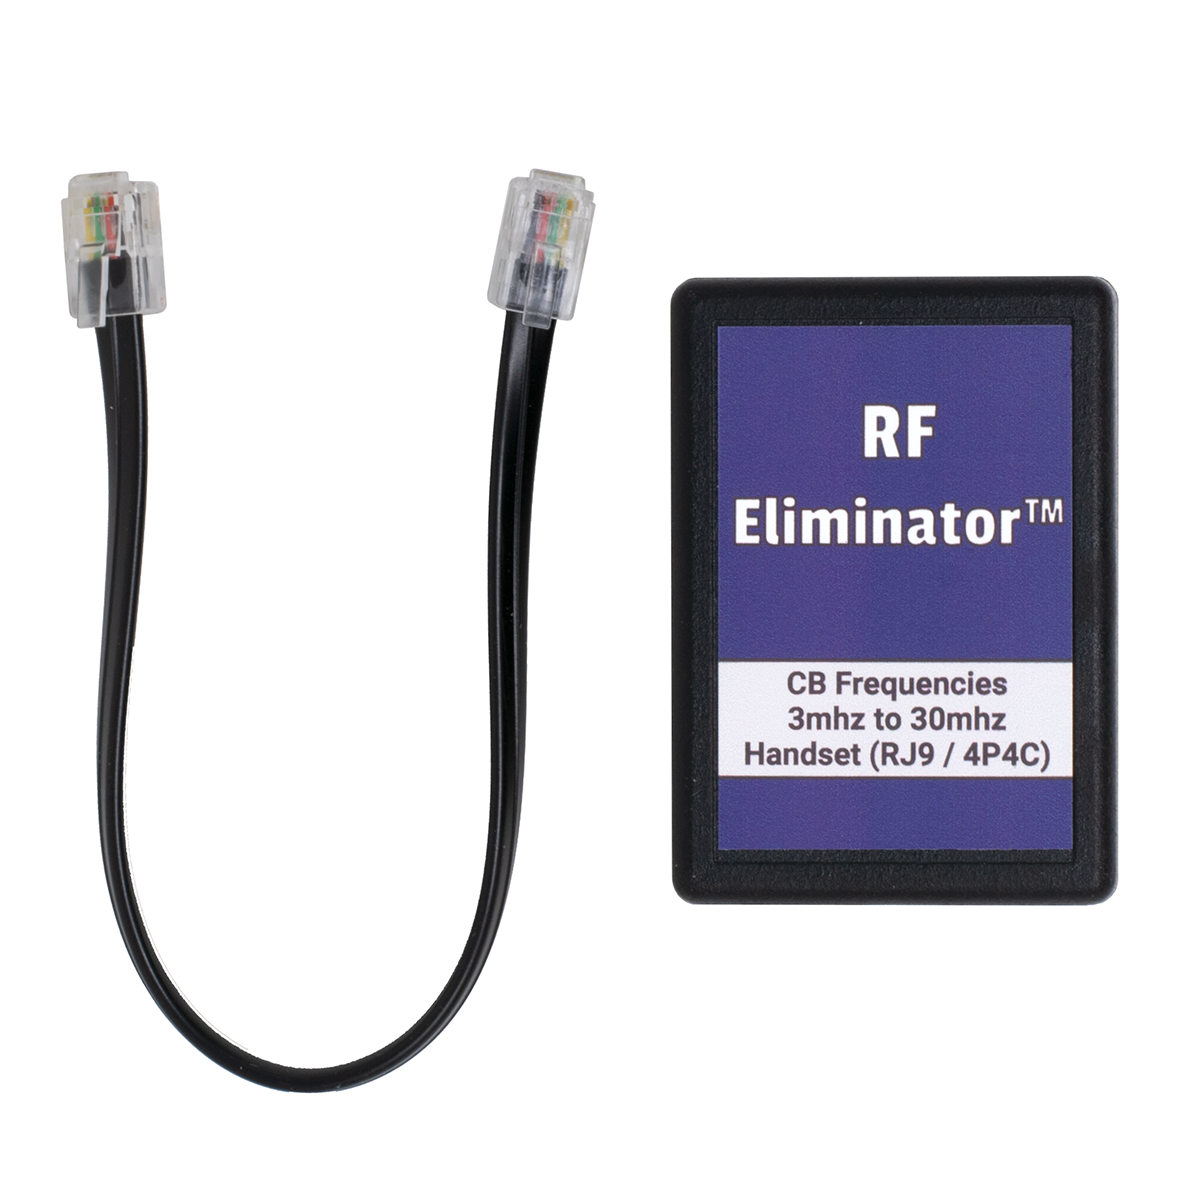 RF Eliminator - Handset - CB (Top View)